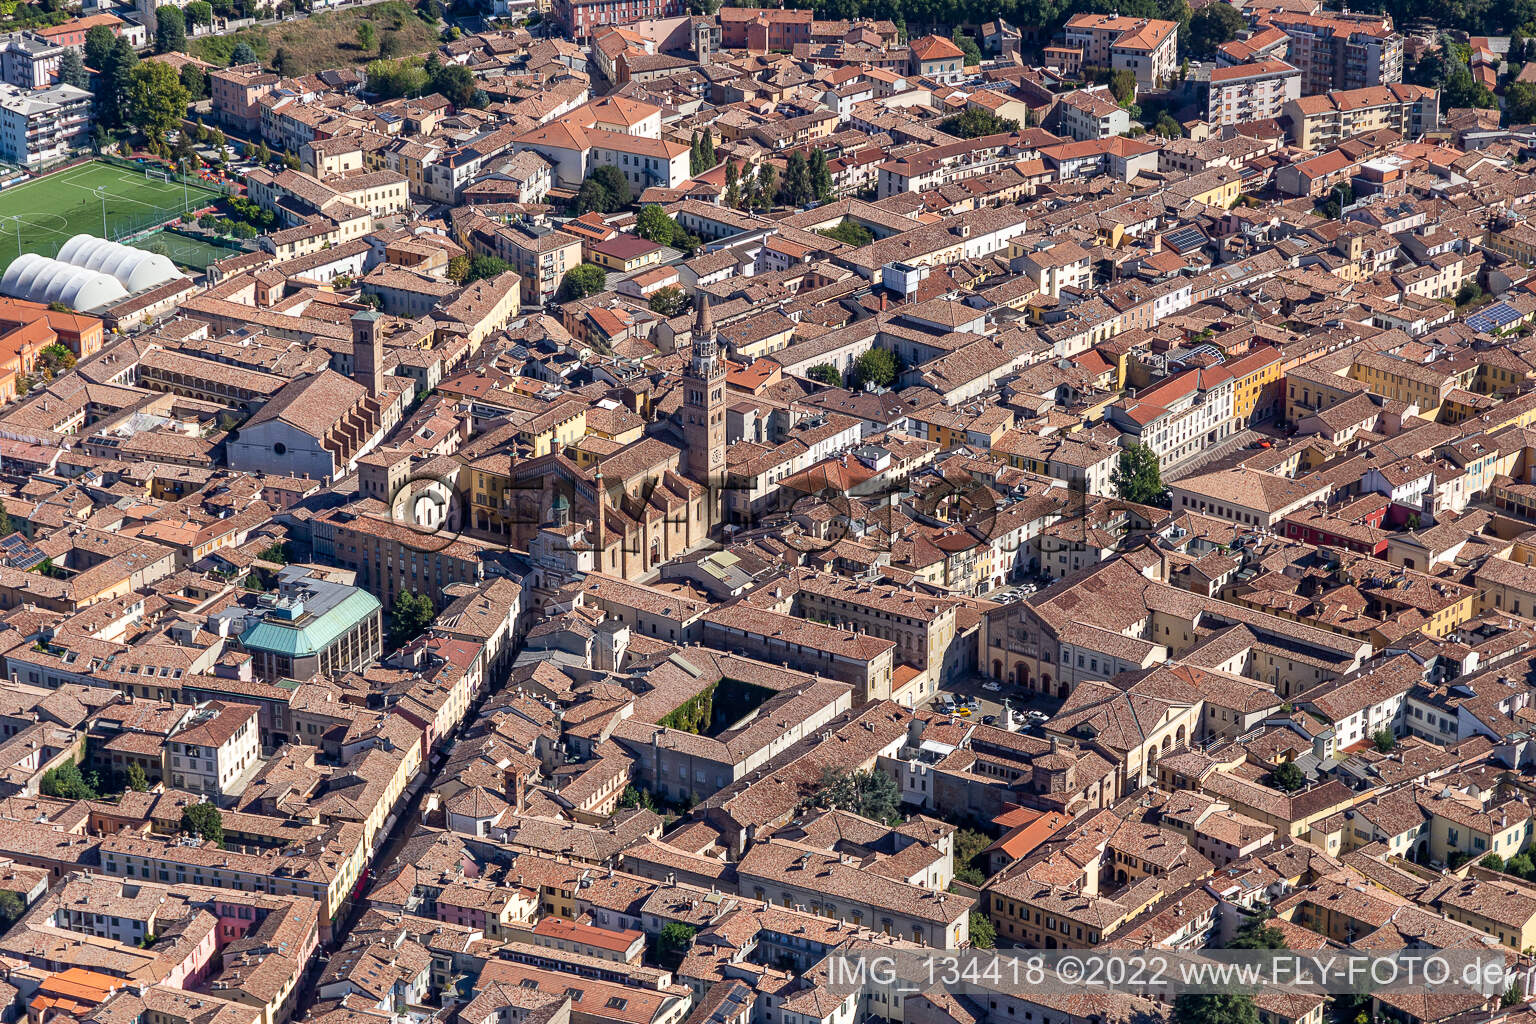 Luftbild von Cattedrale di Santa Maria Assunta in Crema im Bundesland Cremona, Italien